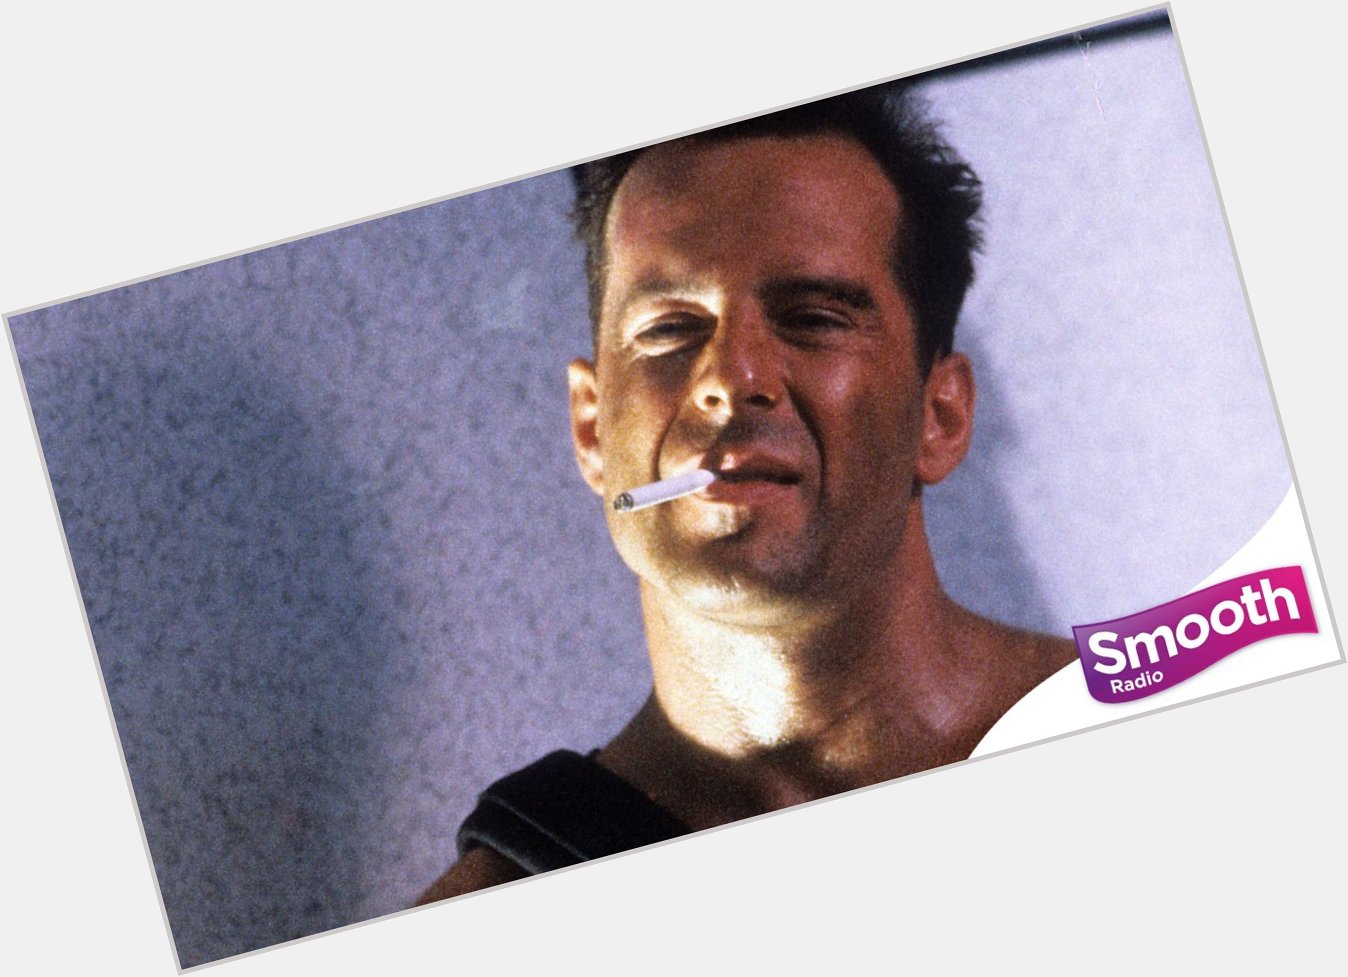 Happy 66th birthday, Bruce Willis! Here he is as John McClane in the 1988 blockbuster \Die Hard\. 